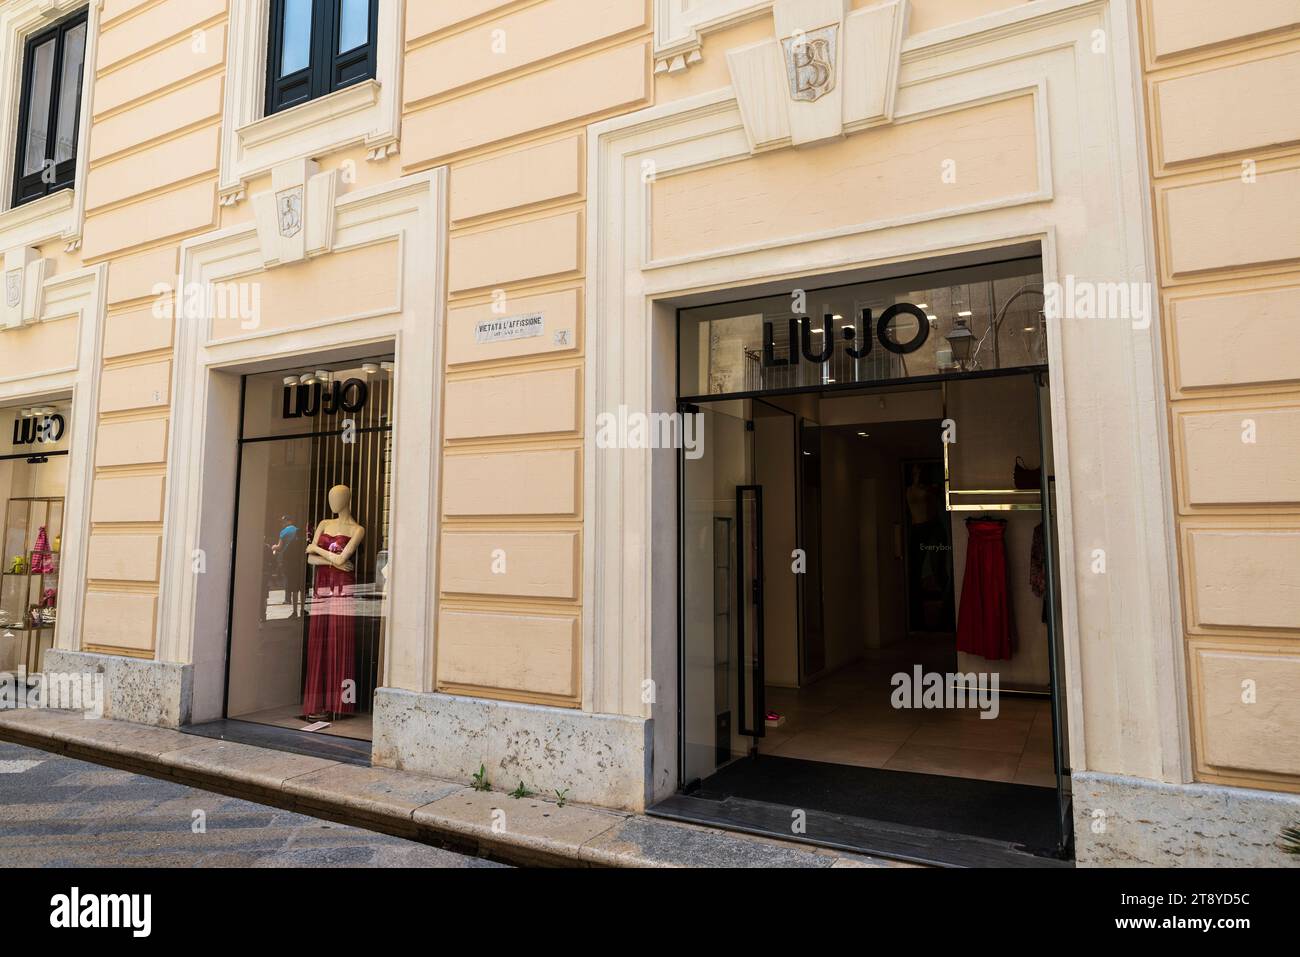 Marsala, Italy - May 11, 2023: Display of a Liujo or Liu Jo, luxury clothing store on a shopping street in Marsala, Trapani, Sicily, Italy Stock Photo